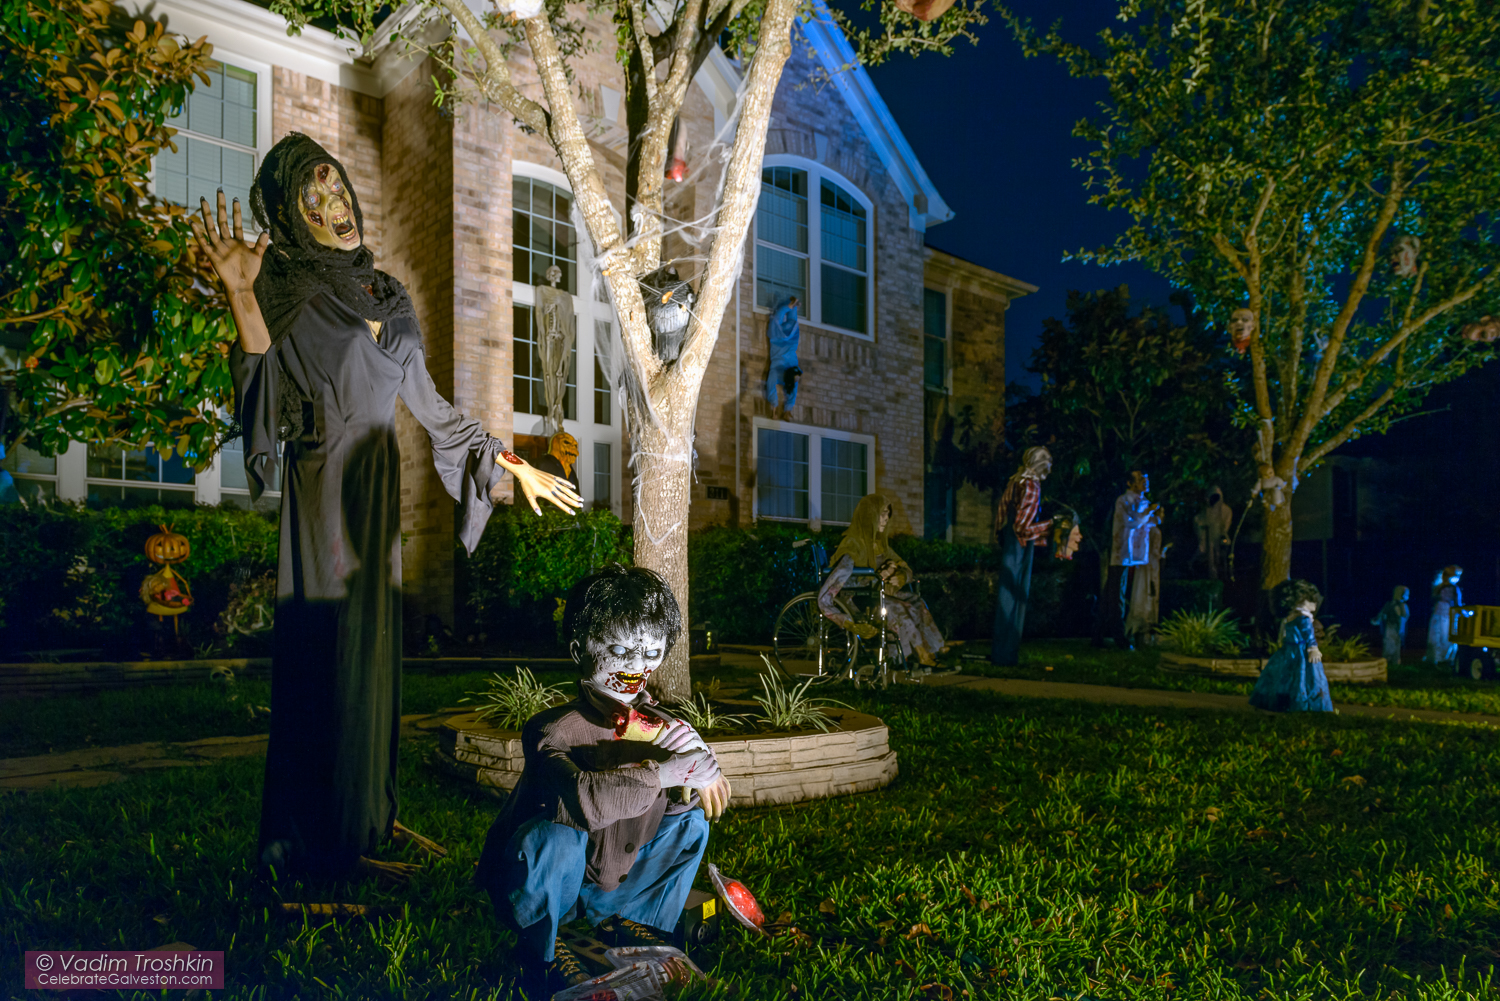 Halloween Decorations - Blog - celebrategalveston.com